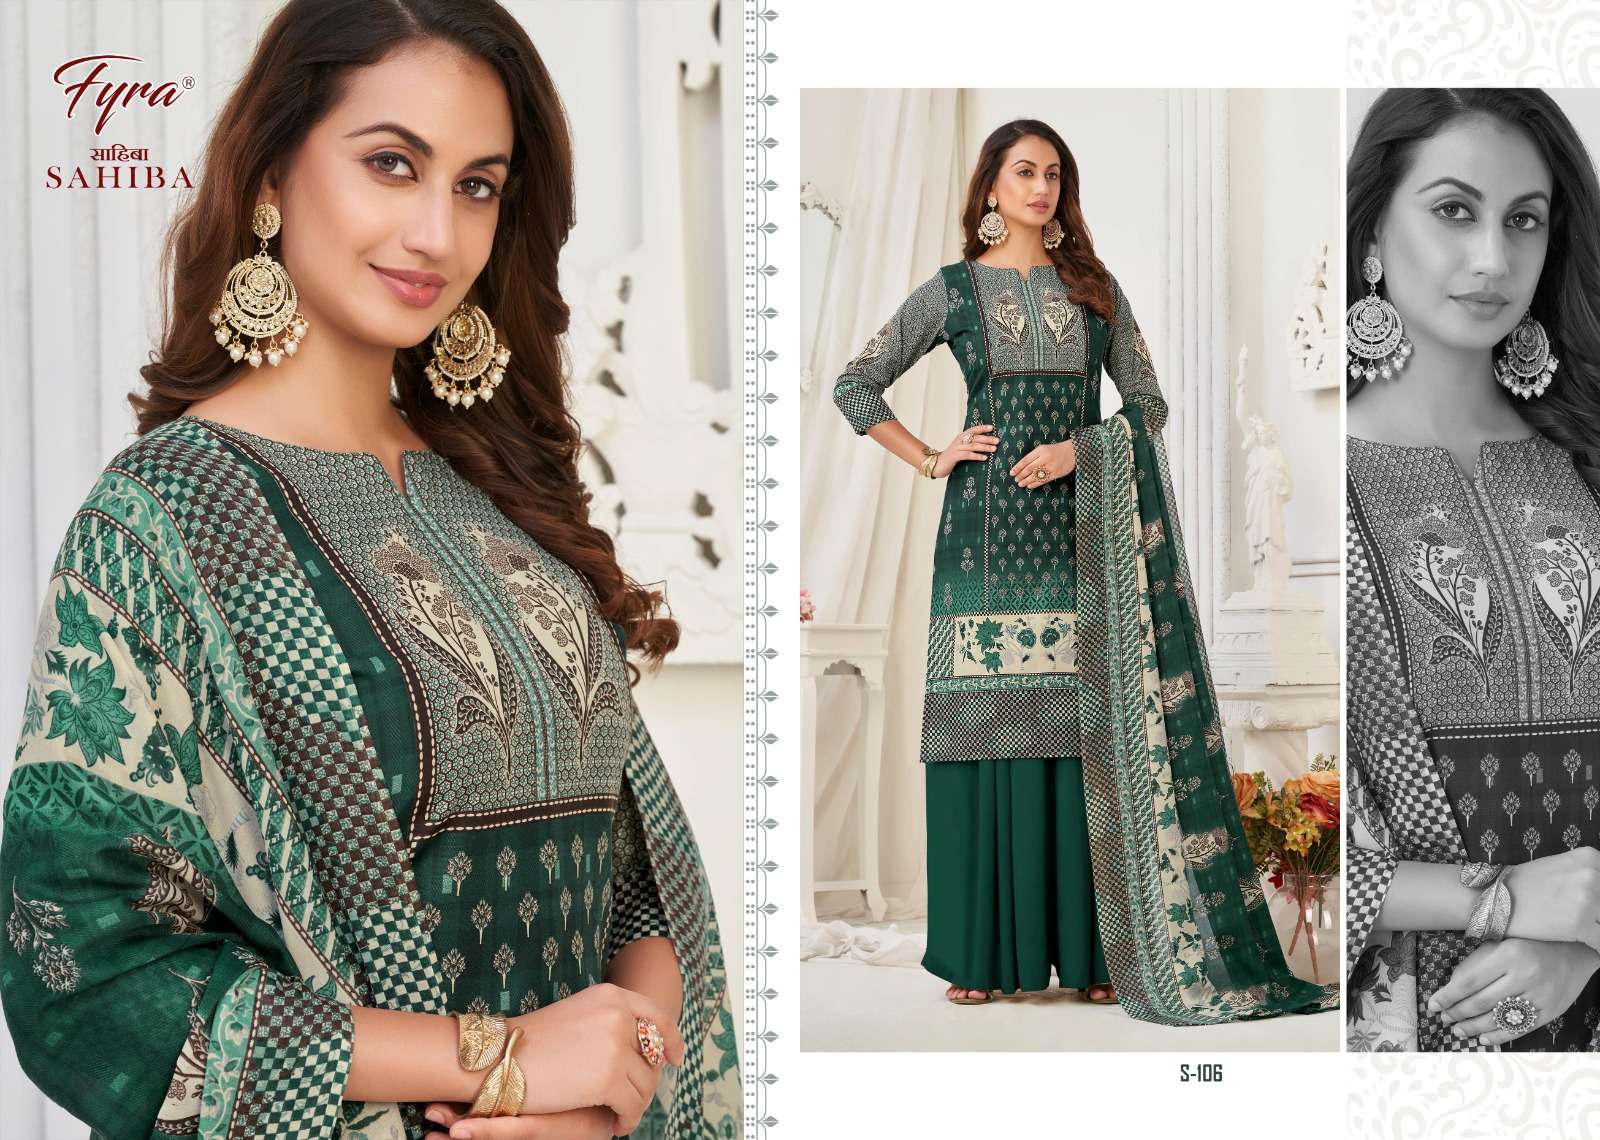 fyra designing sahiba 101-110 series latest wedding wear pakistani salwar kameez wholesaler surat gujarat